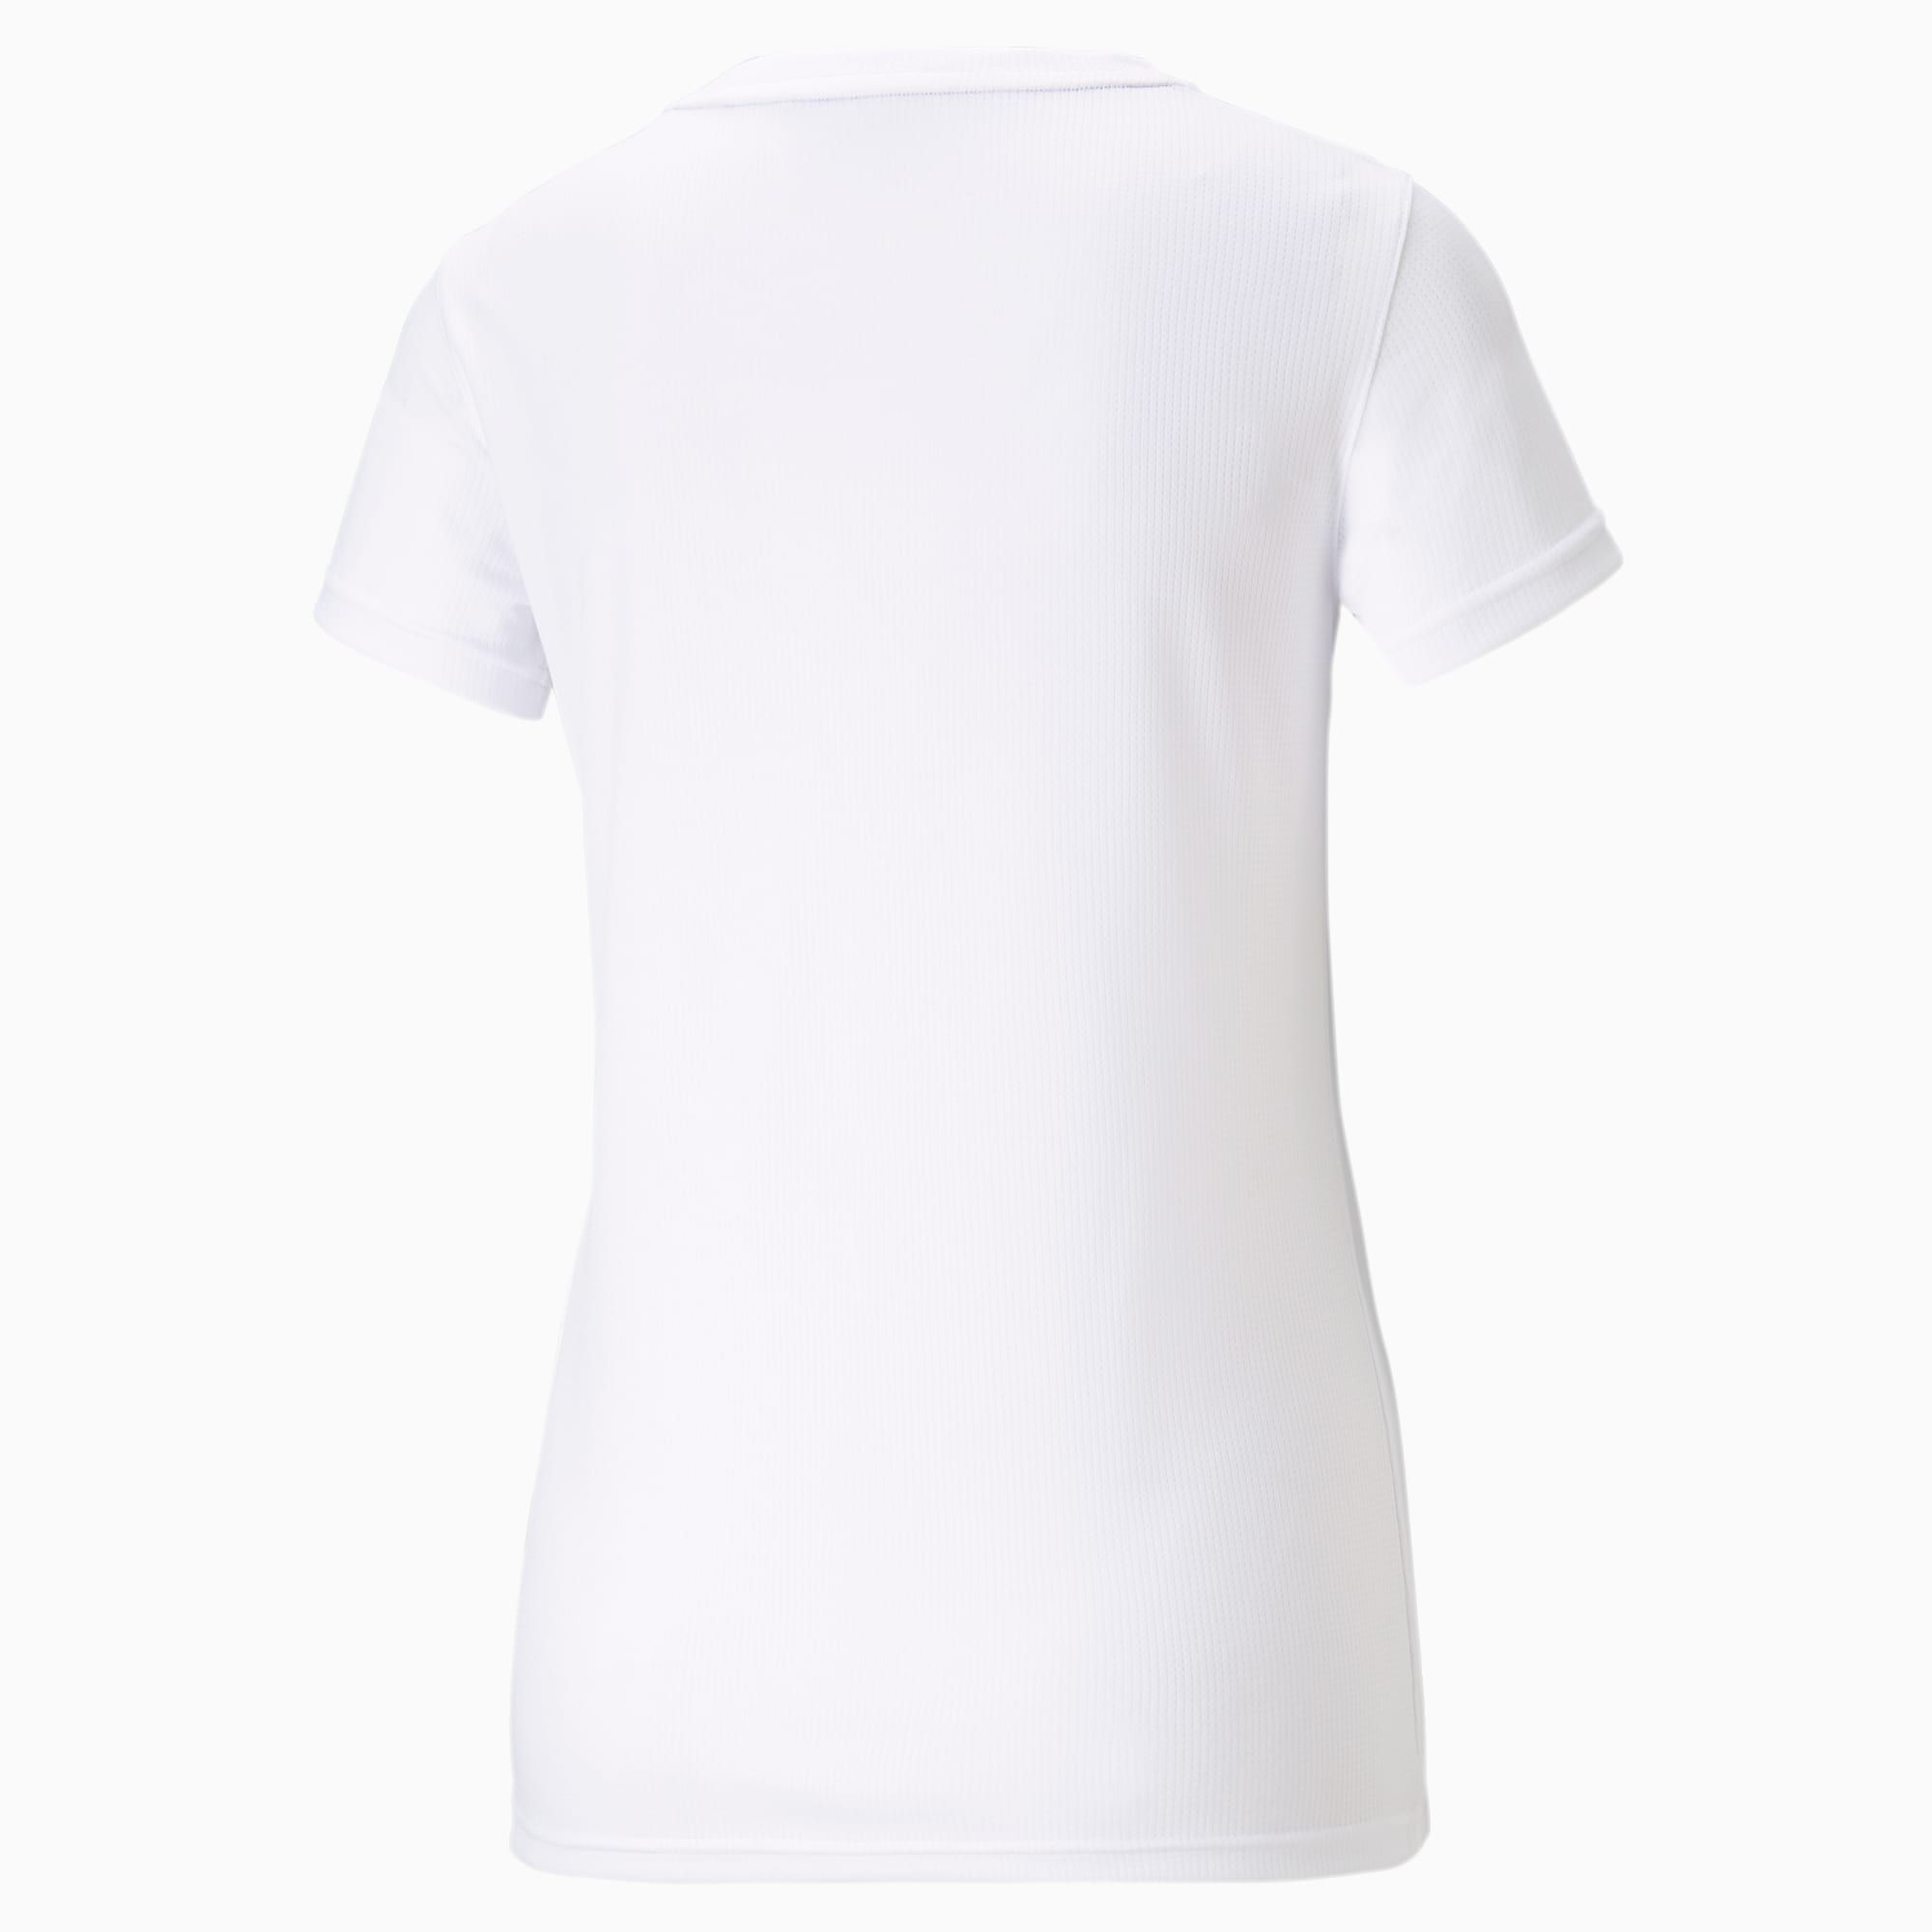 PUMA Performance Women's Training T-Shirt, White, Size M, Clothing